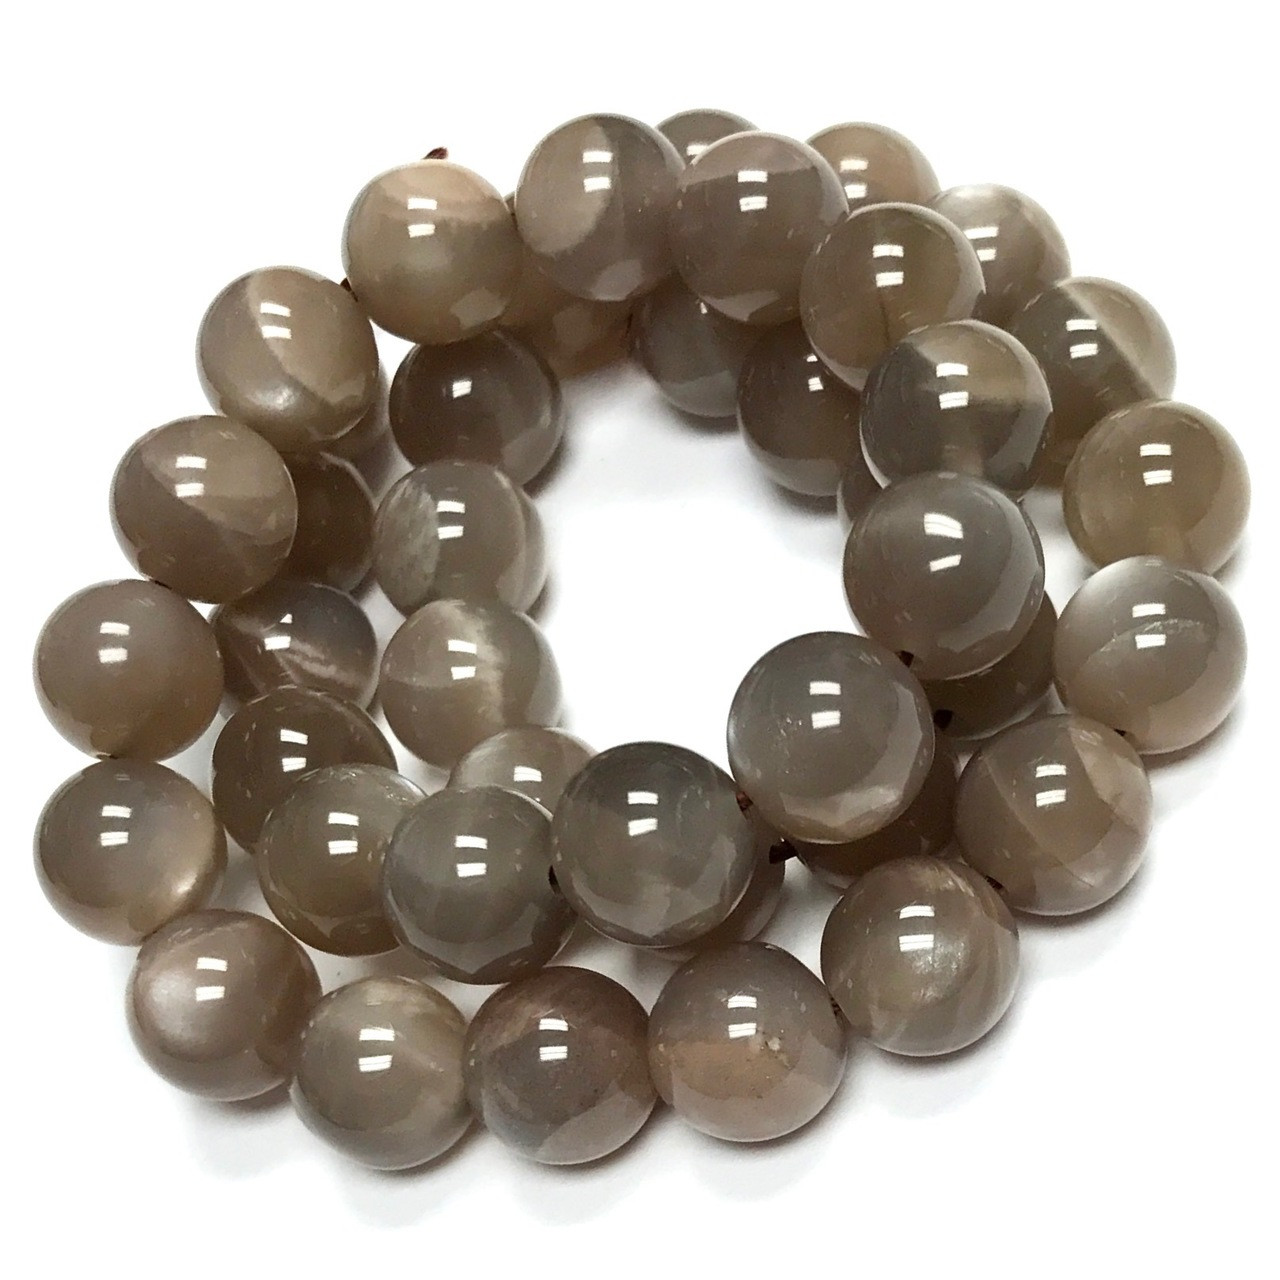 Moonstone Beads, Chocolate Moonstone Beads